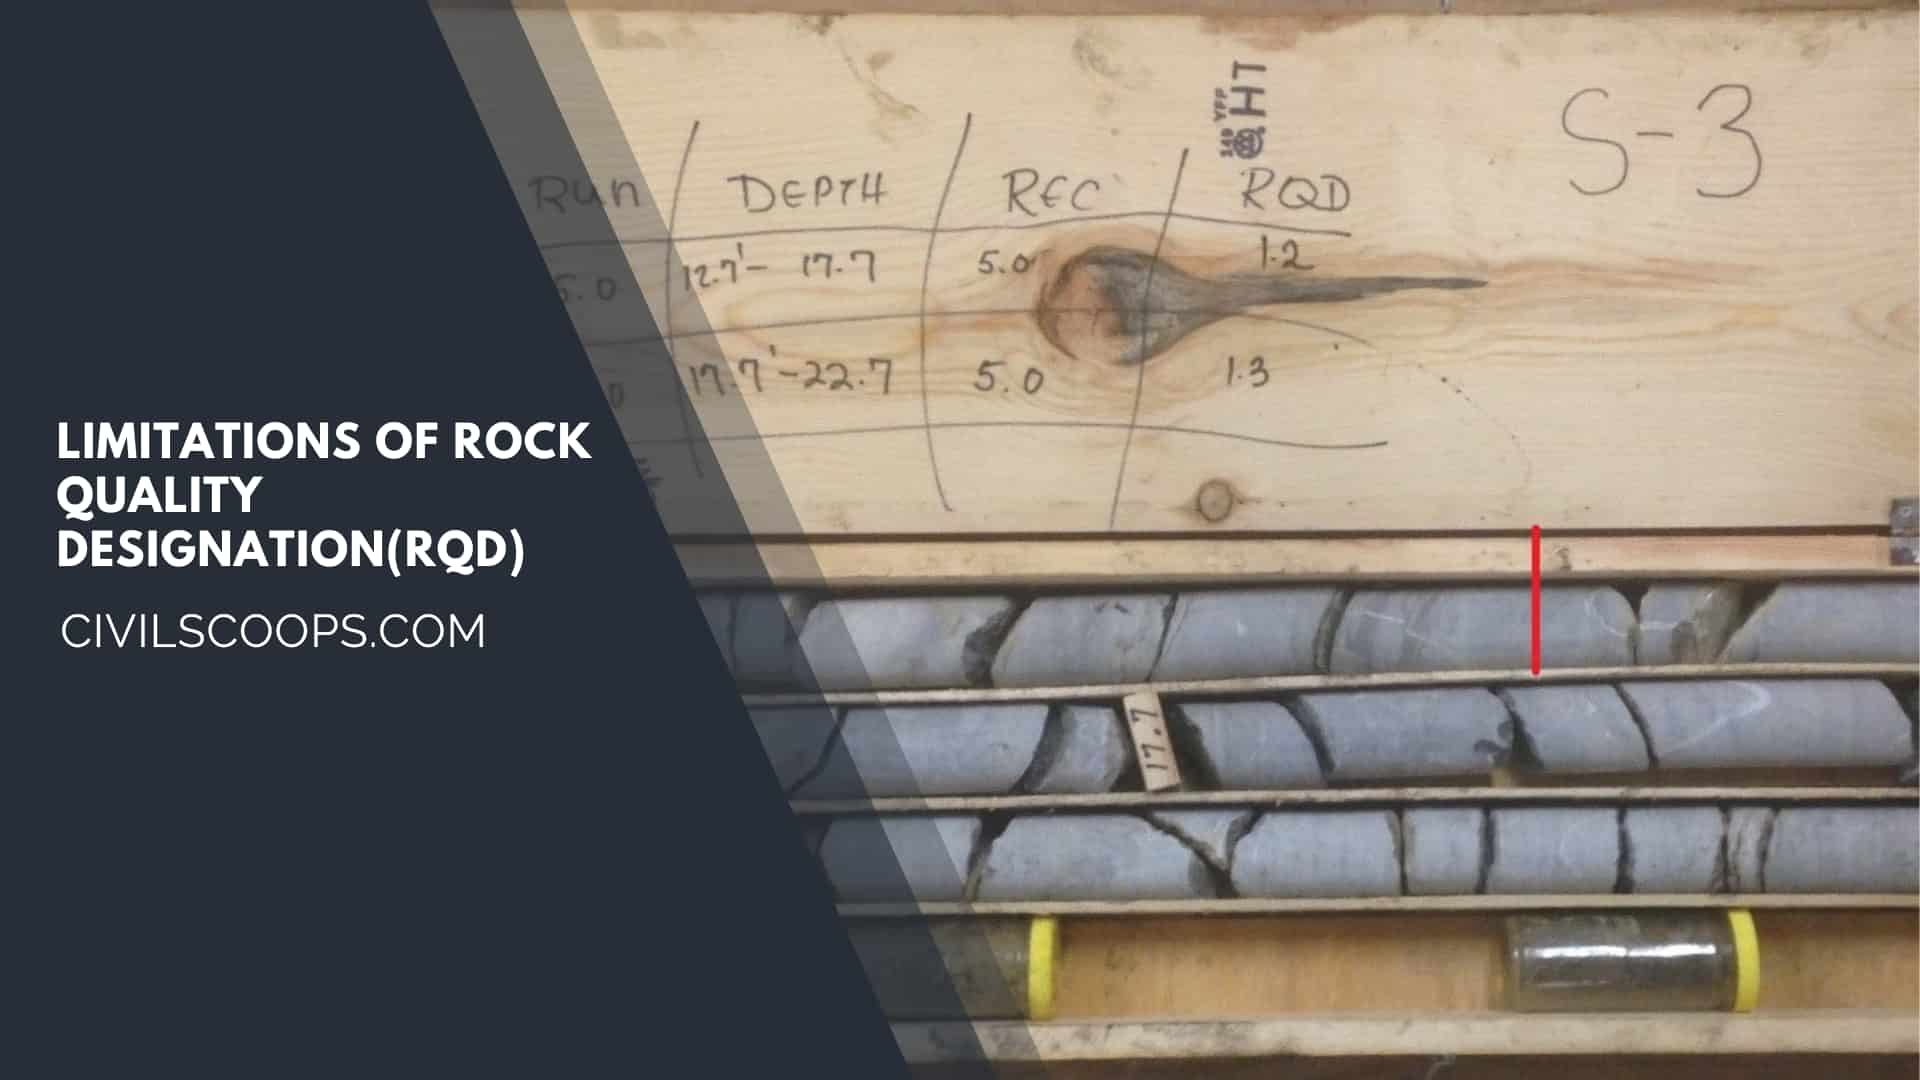 Limitations of Rock Quality Designation(rqd)